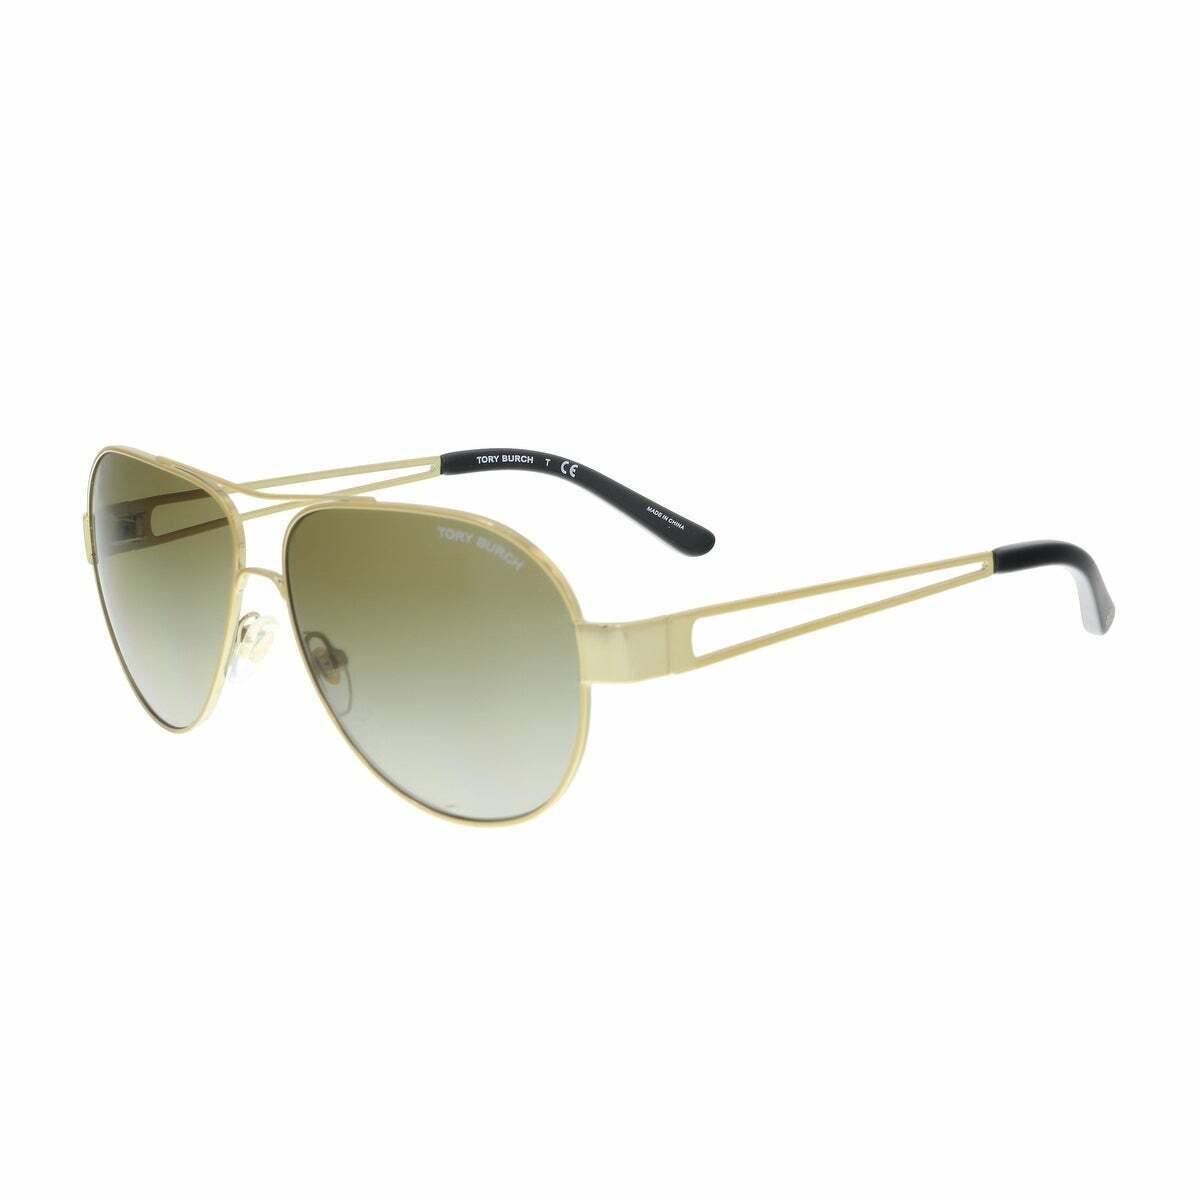 Tory Burch Gold Aviator Sunglasses TY6060-304113 55